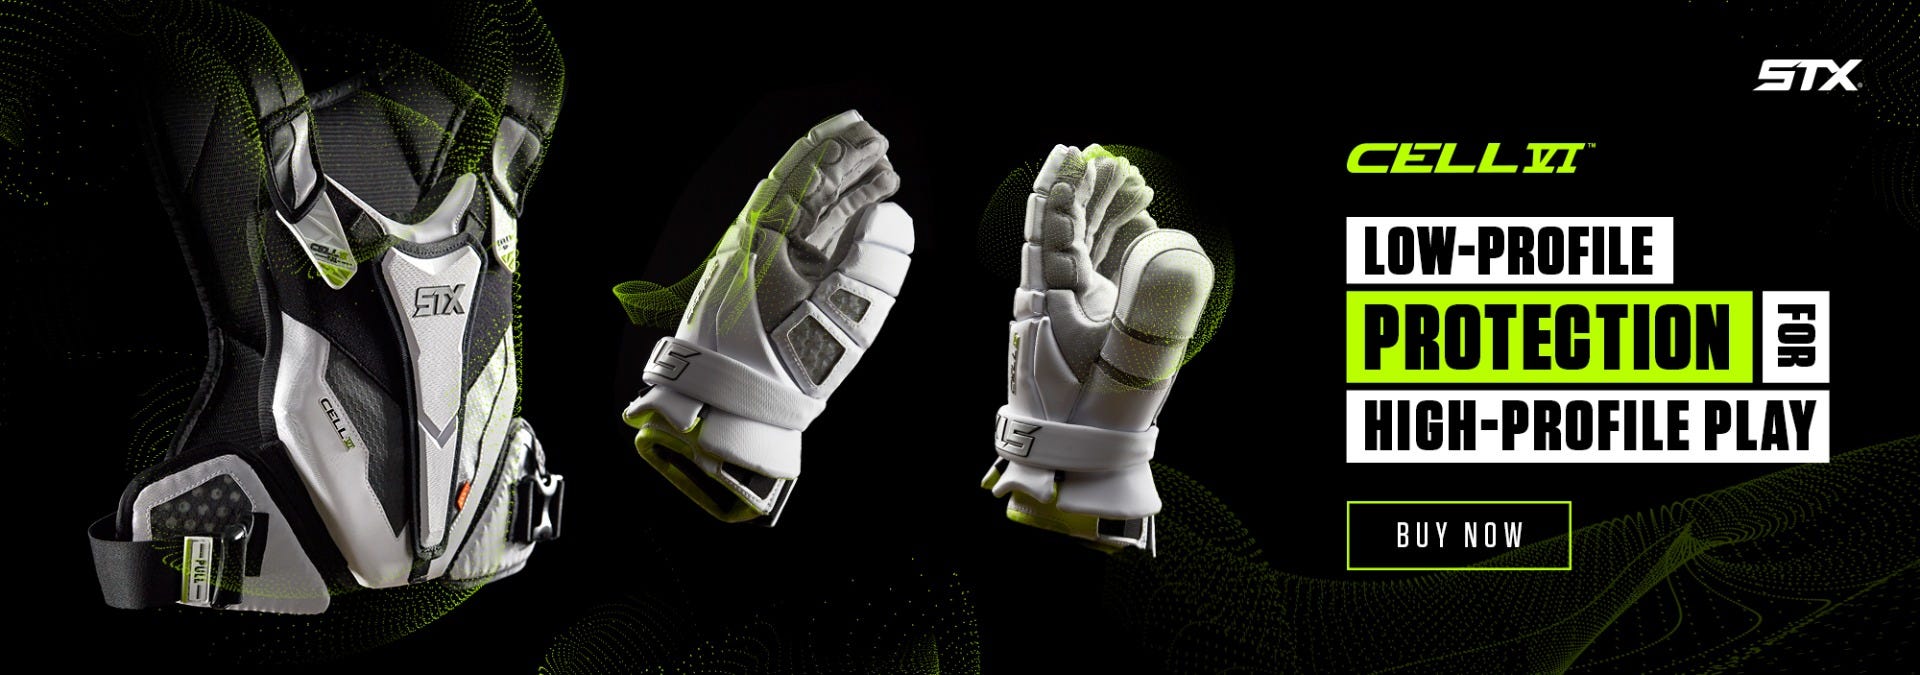 STX Cell VI Gloves & Pads